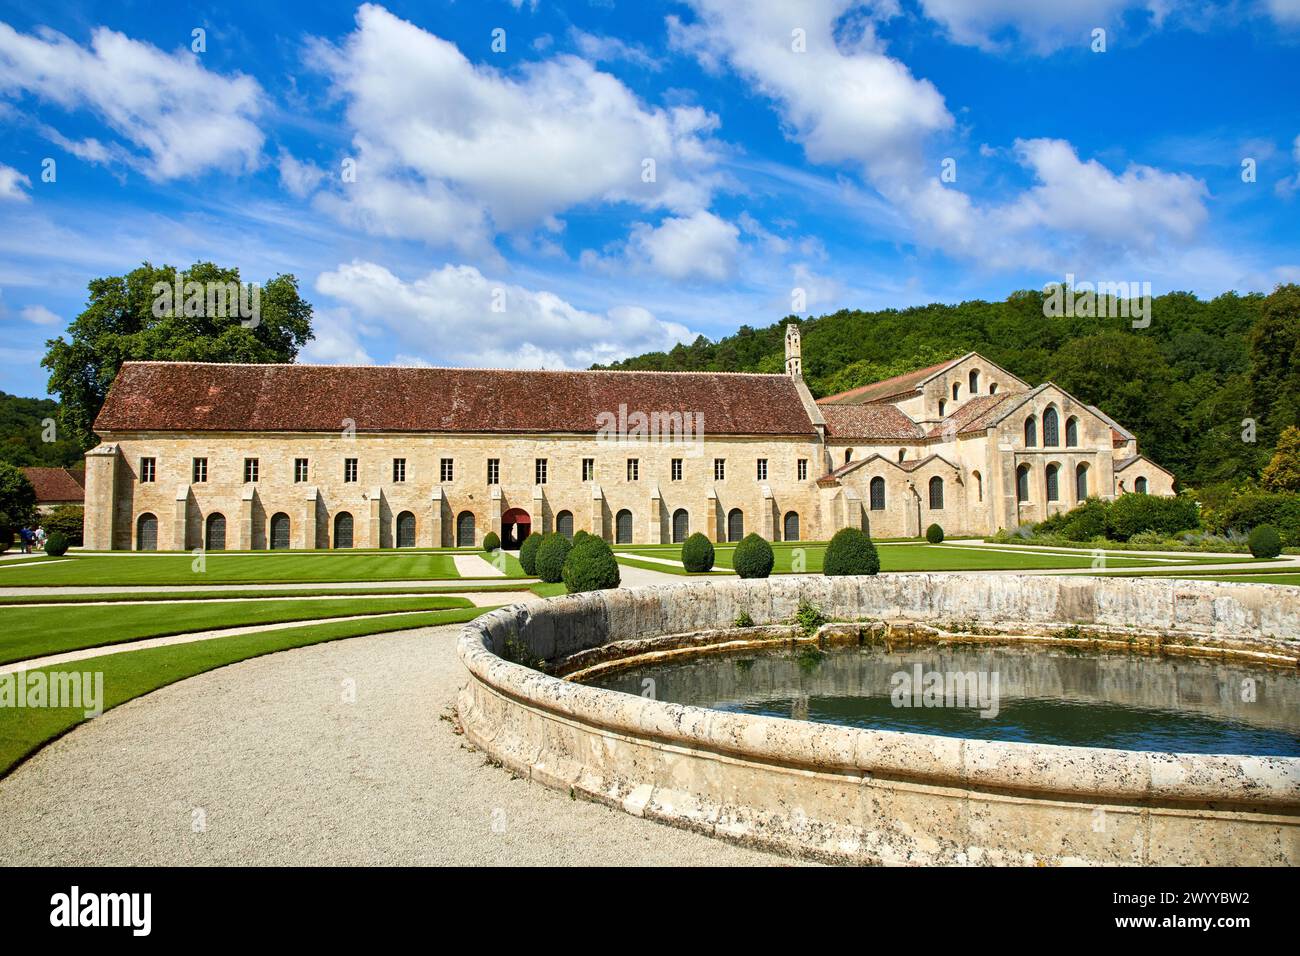 Abbaye Royale de Notre Dame de Fontenay, Fontenay Cistercian Abbey, Montbard, Cote d'Or, Burgundy Region, Bourgogne, France, Europe. Stock Photo